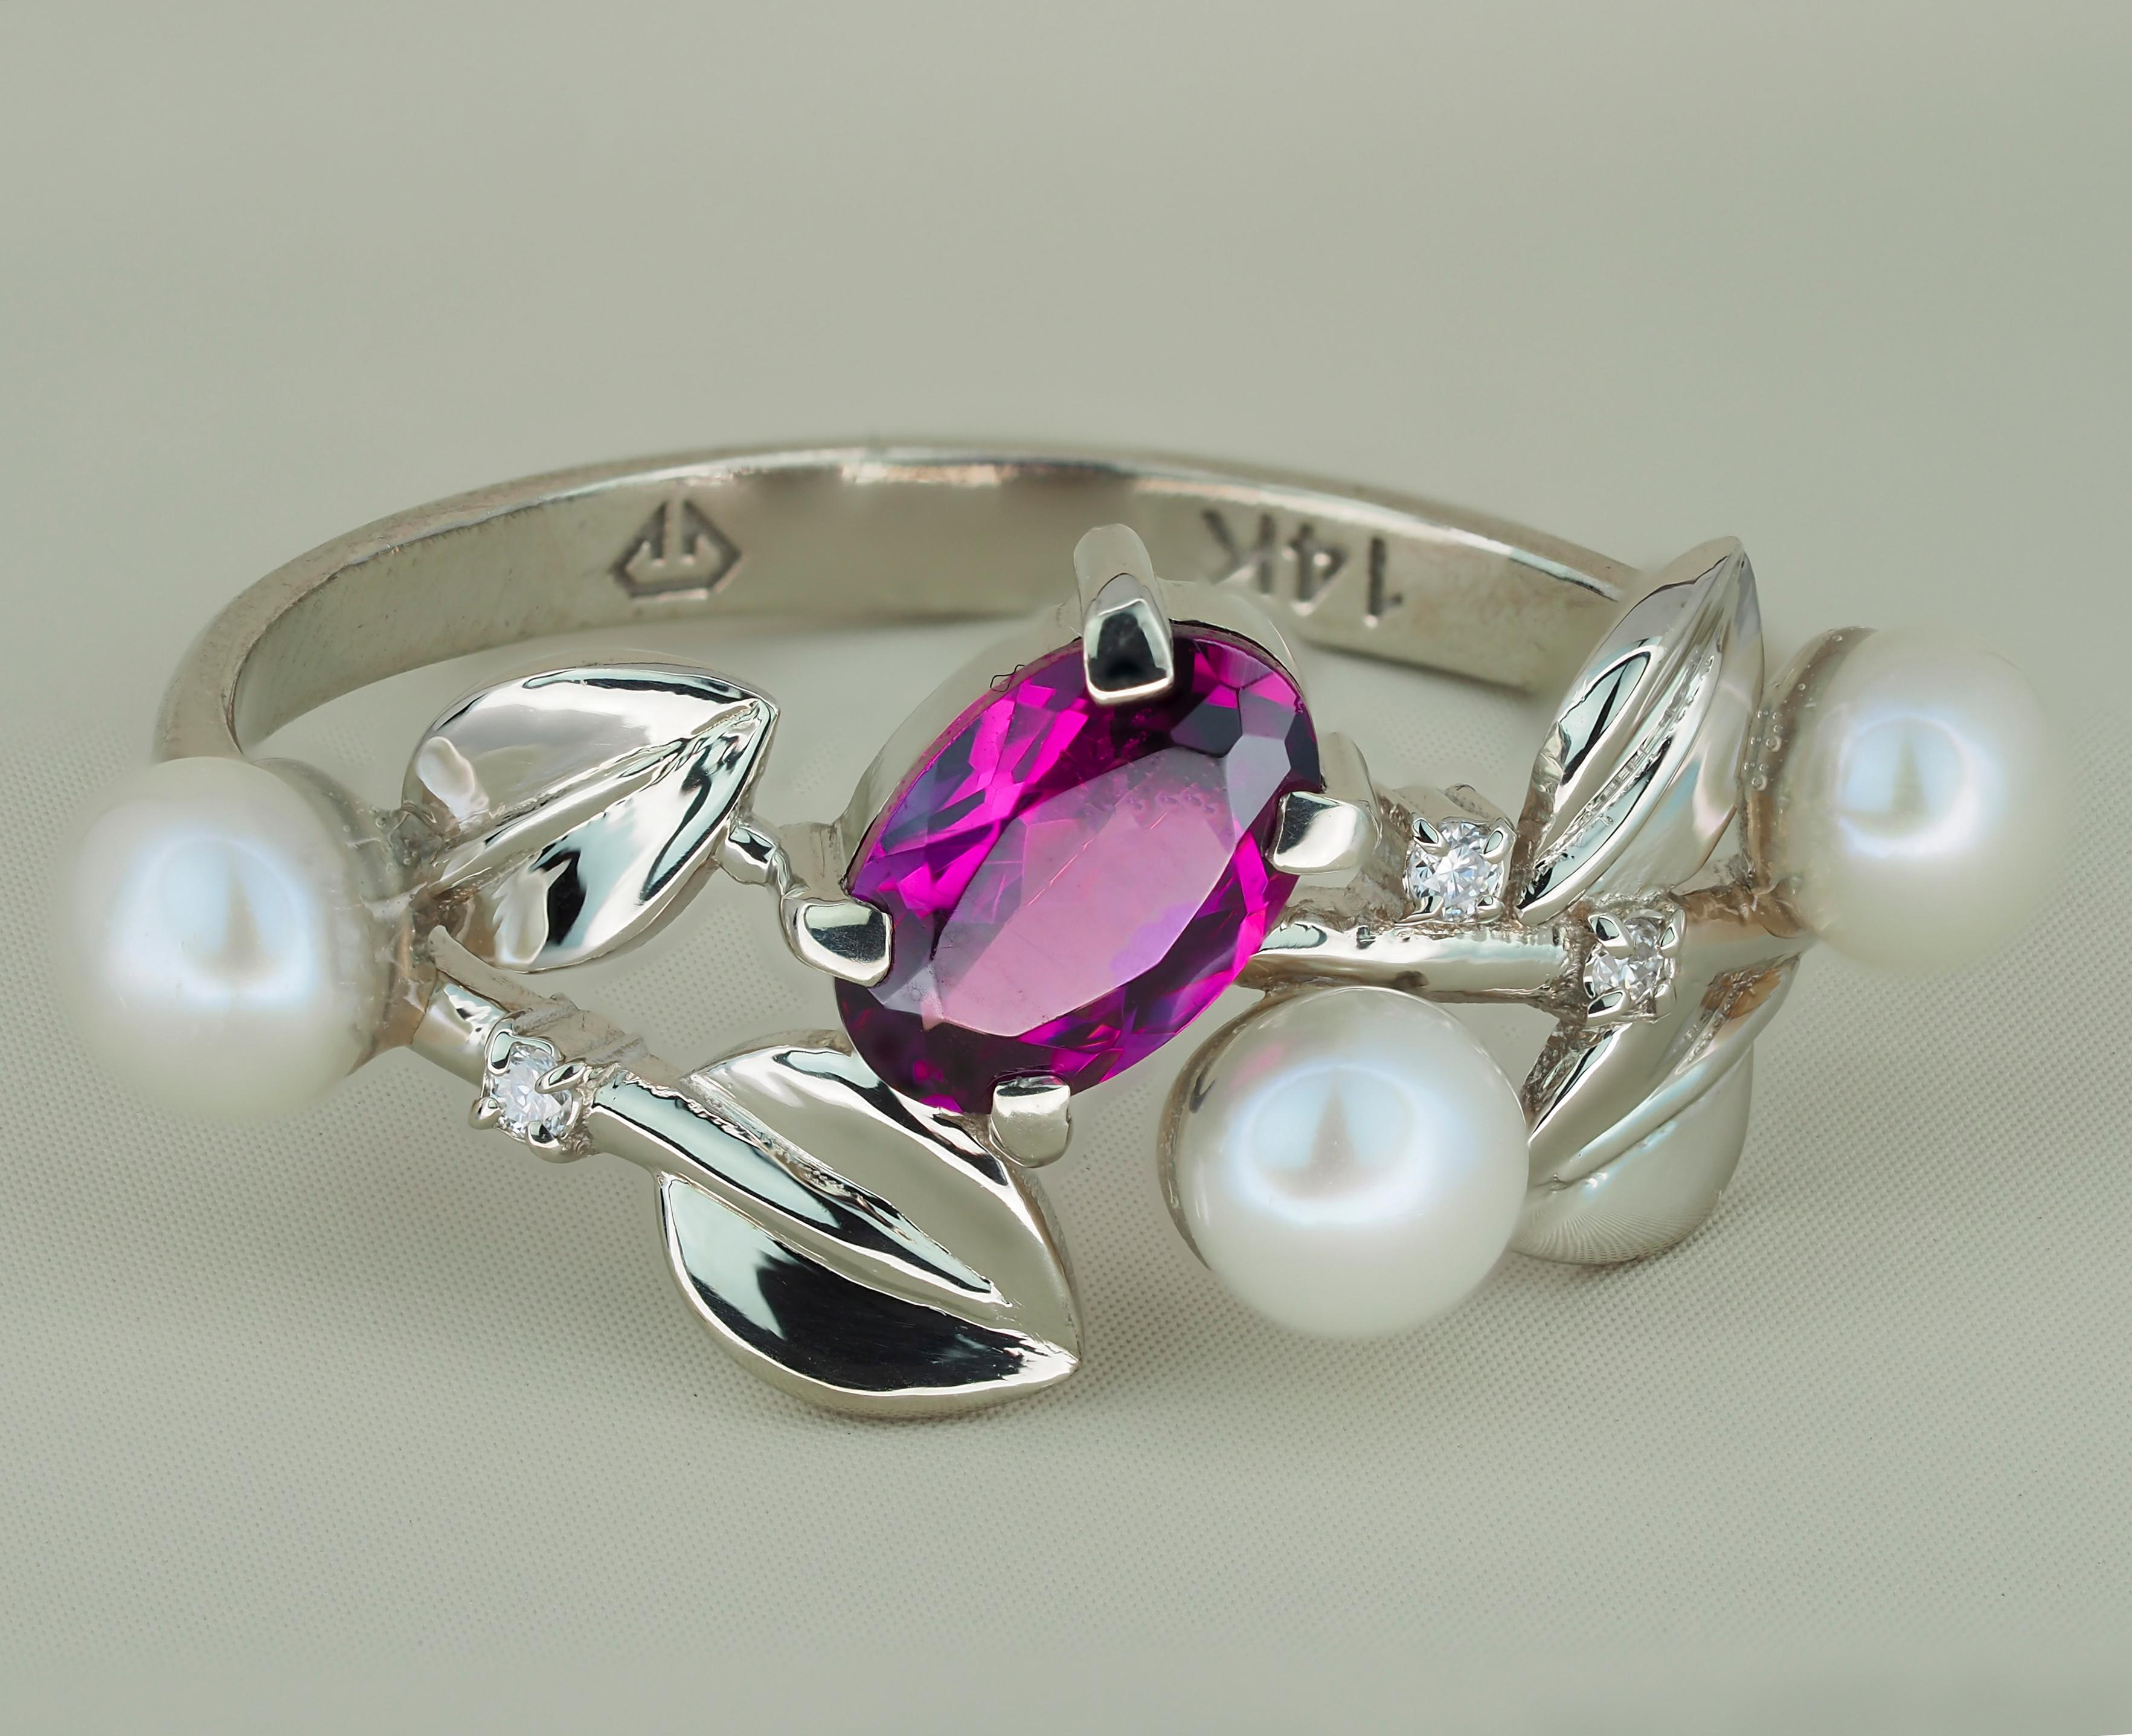 For Sale:  Garnet, pearls 14k gold ring. Gold leaves ring.  5